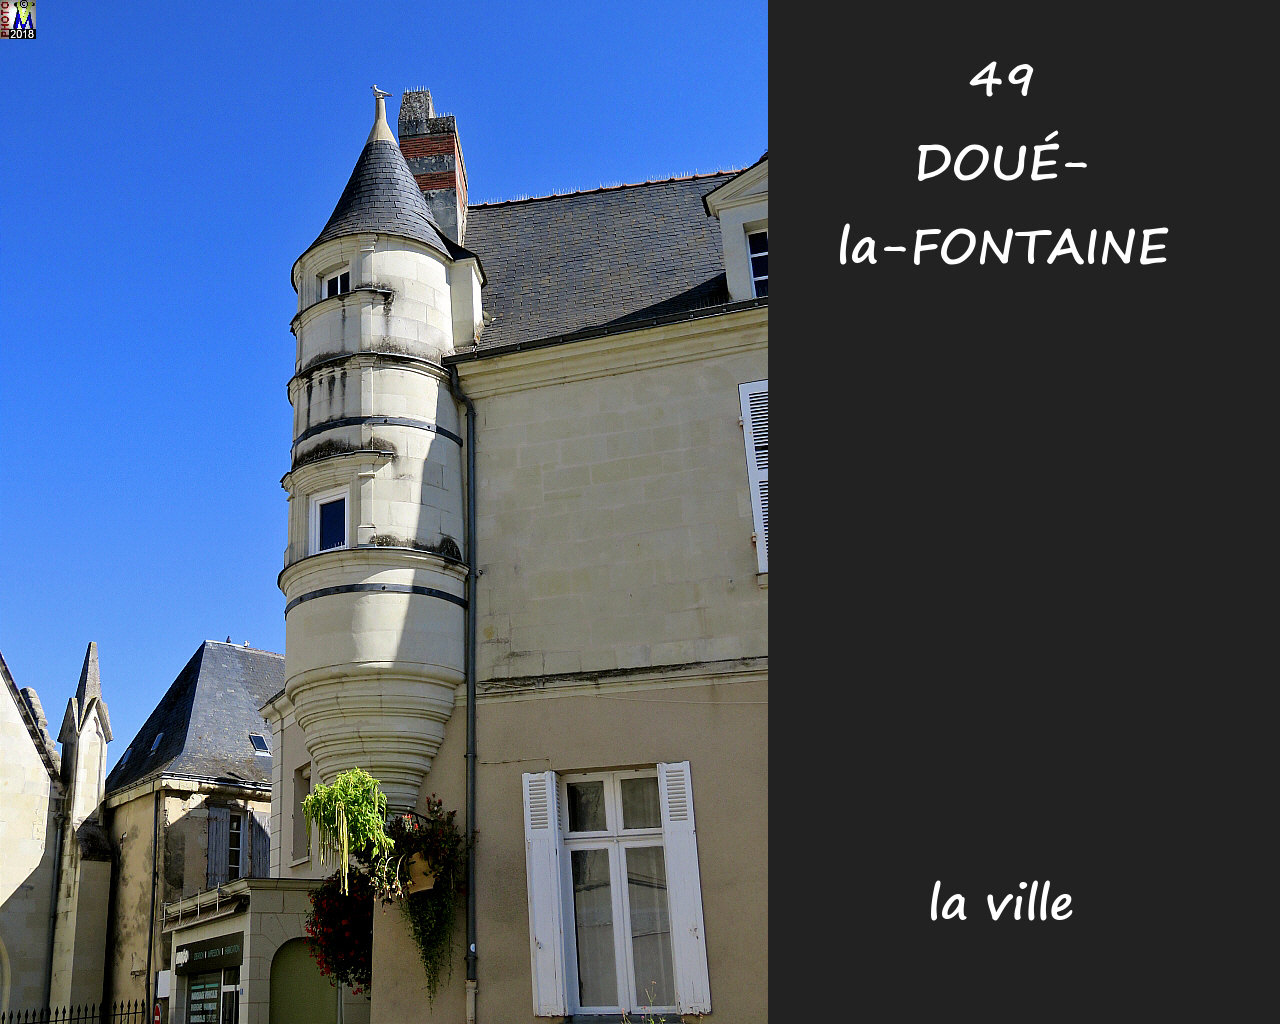 49DOUE-FONTAINE_ville_1020.jpg